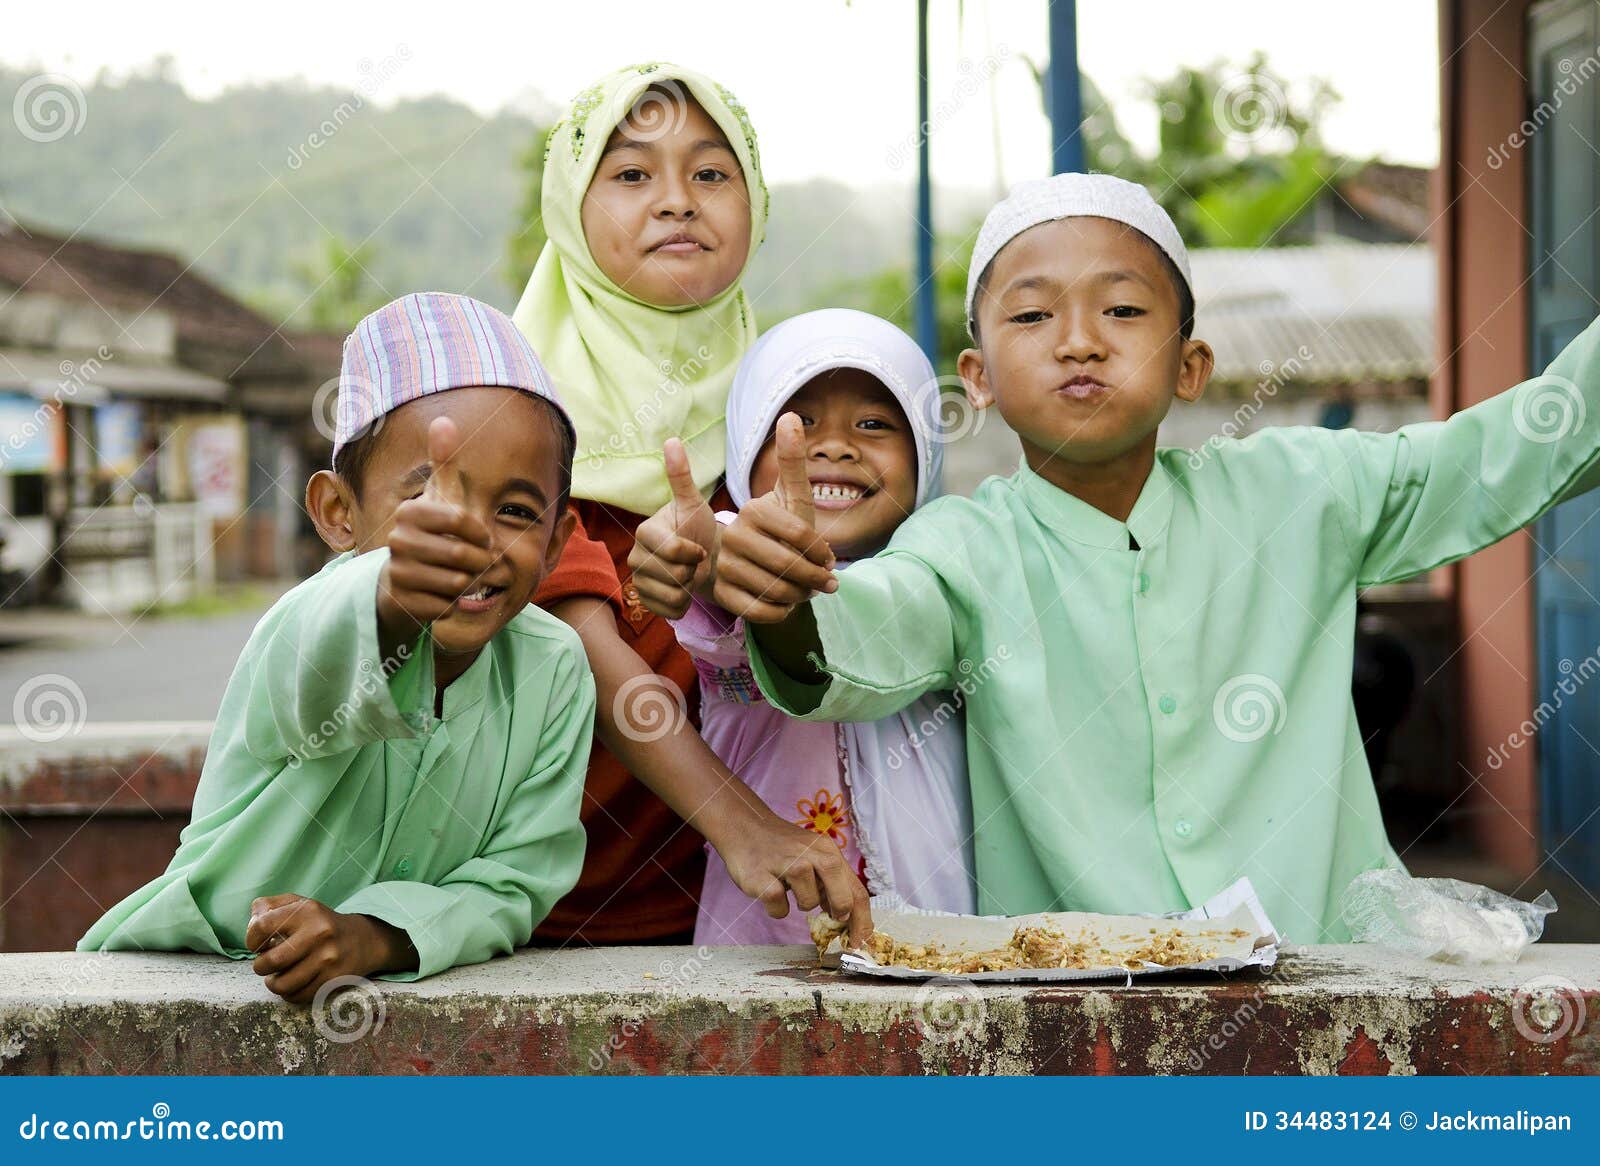 Smiling Muslim Children In Bali Indonesia Editorial Stock ...